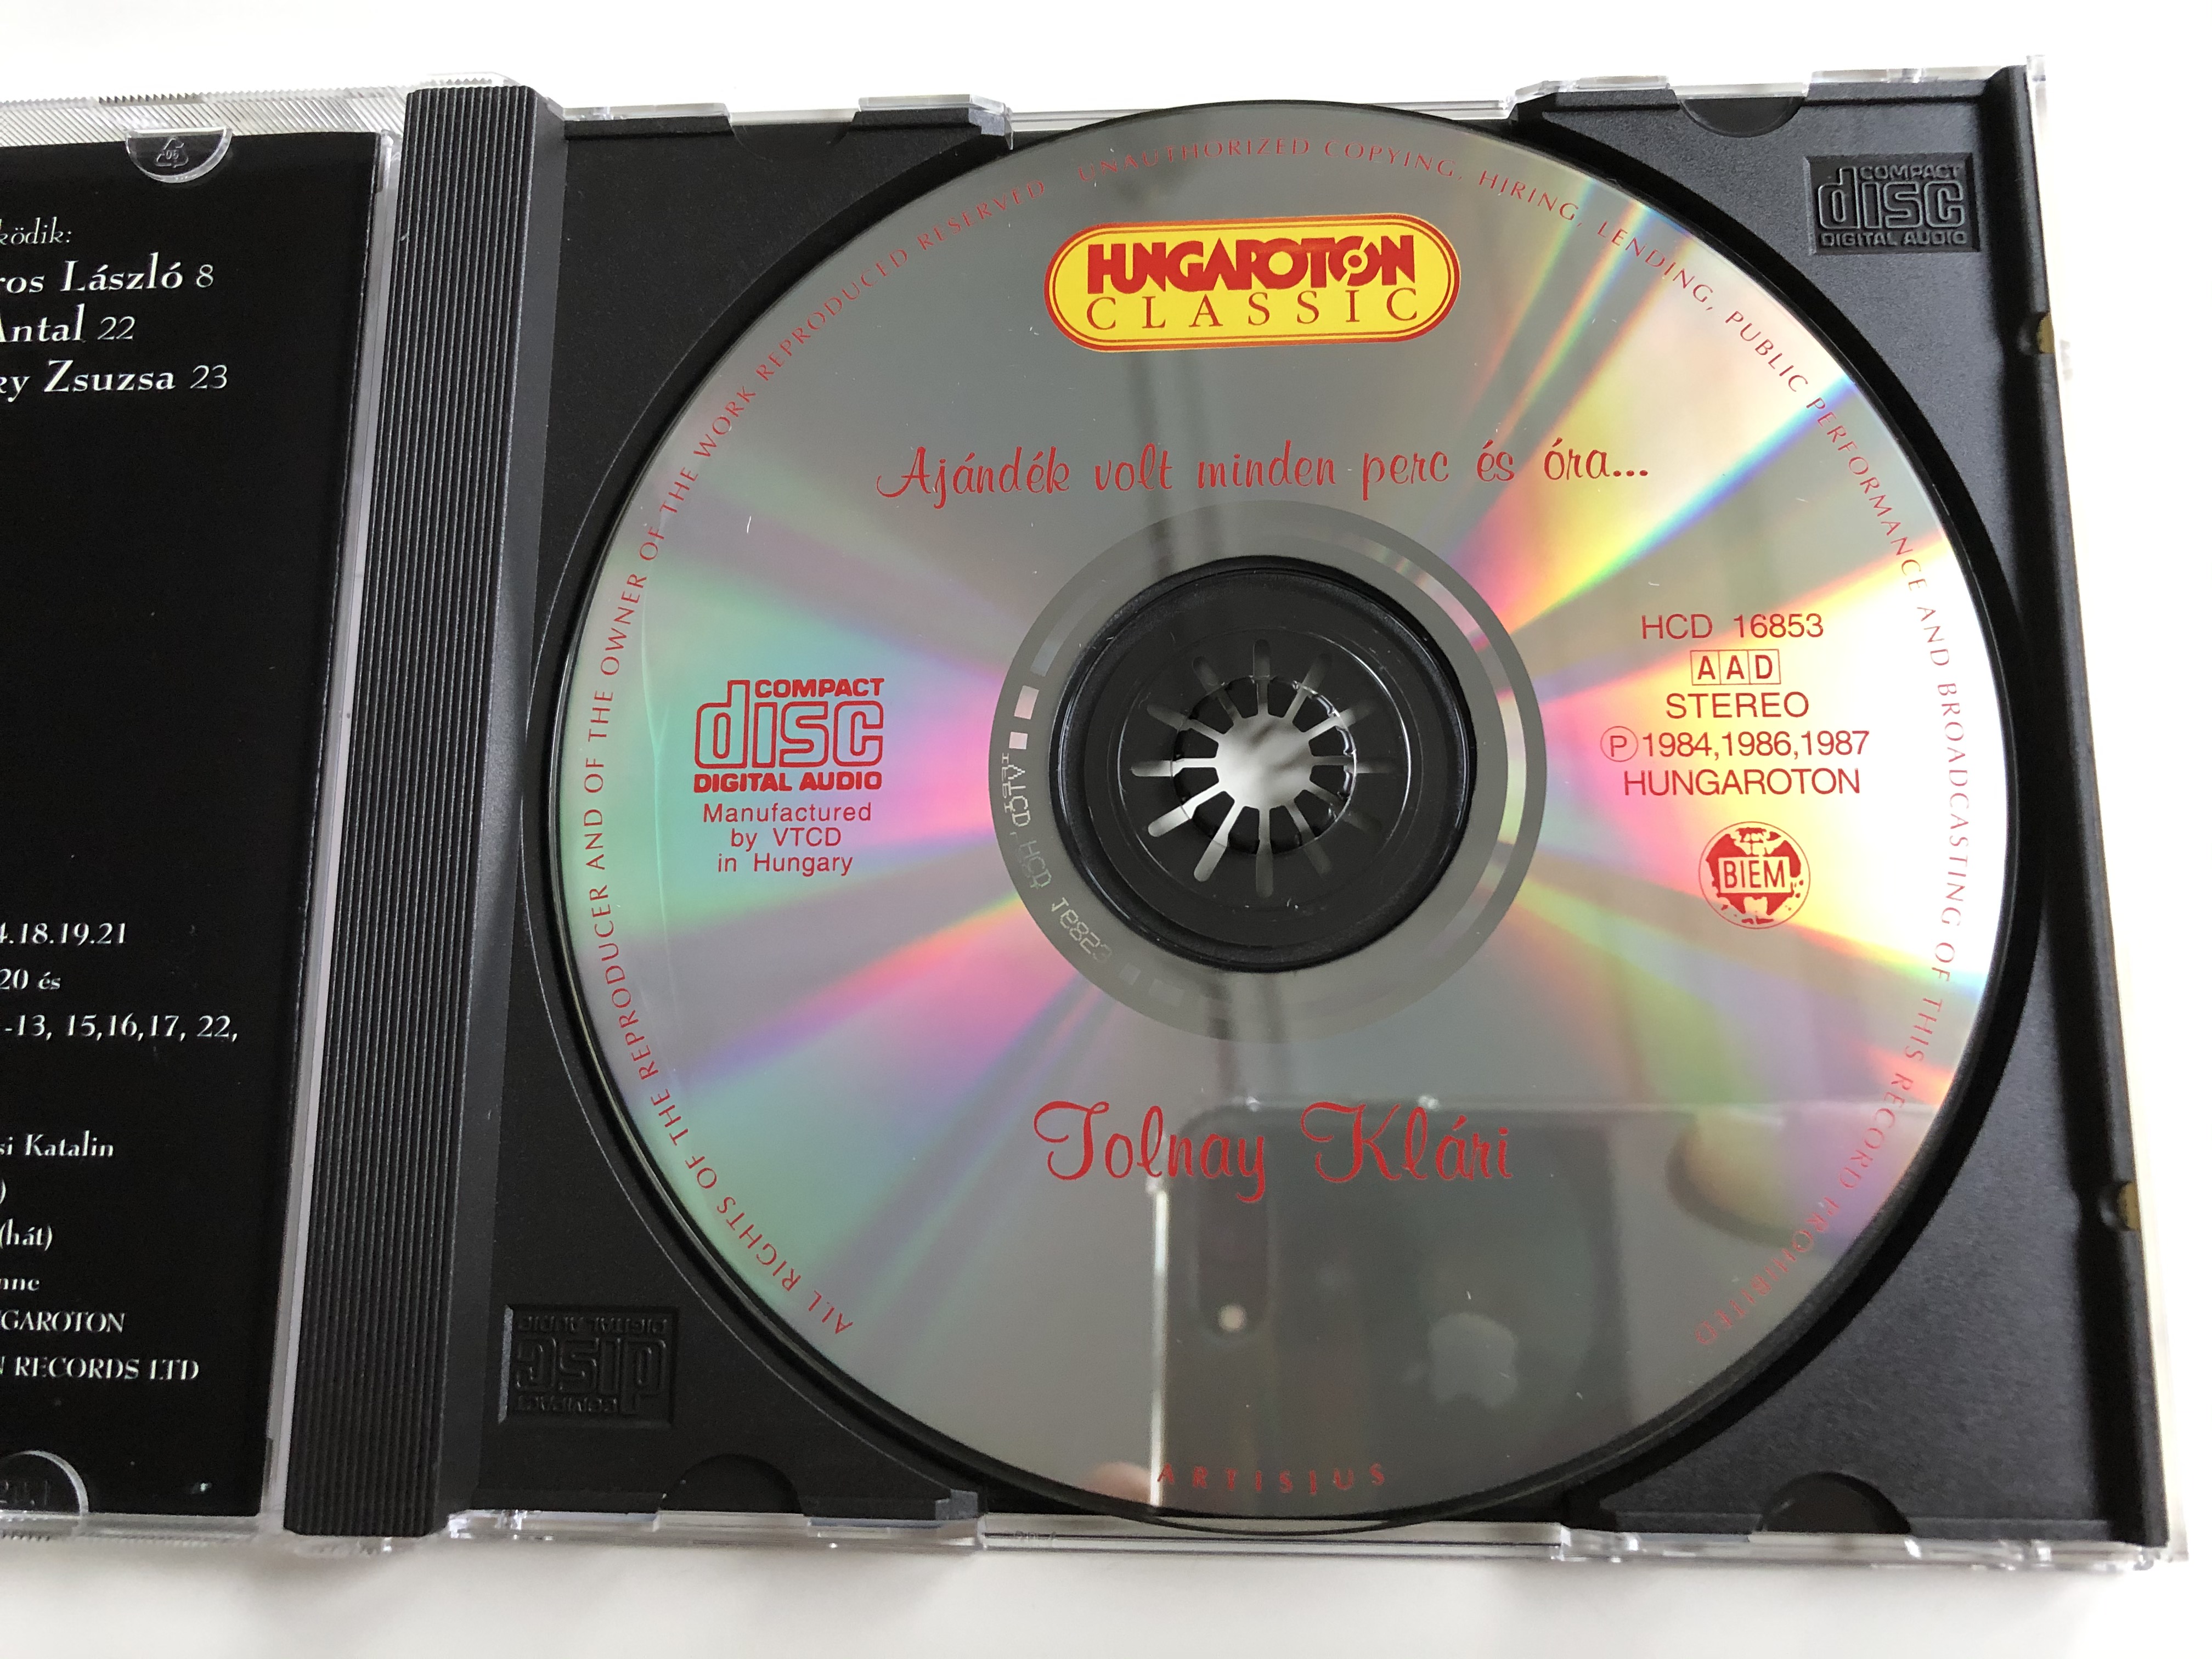 ajandek-volt-minden-perc-es-ora...-tolnay-klari-hungaroton-classic-audio-cd-1998-stereo-hcd-16853-4-.jpg